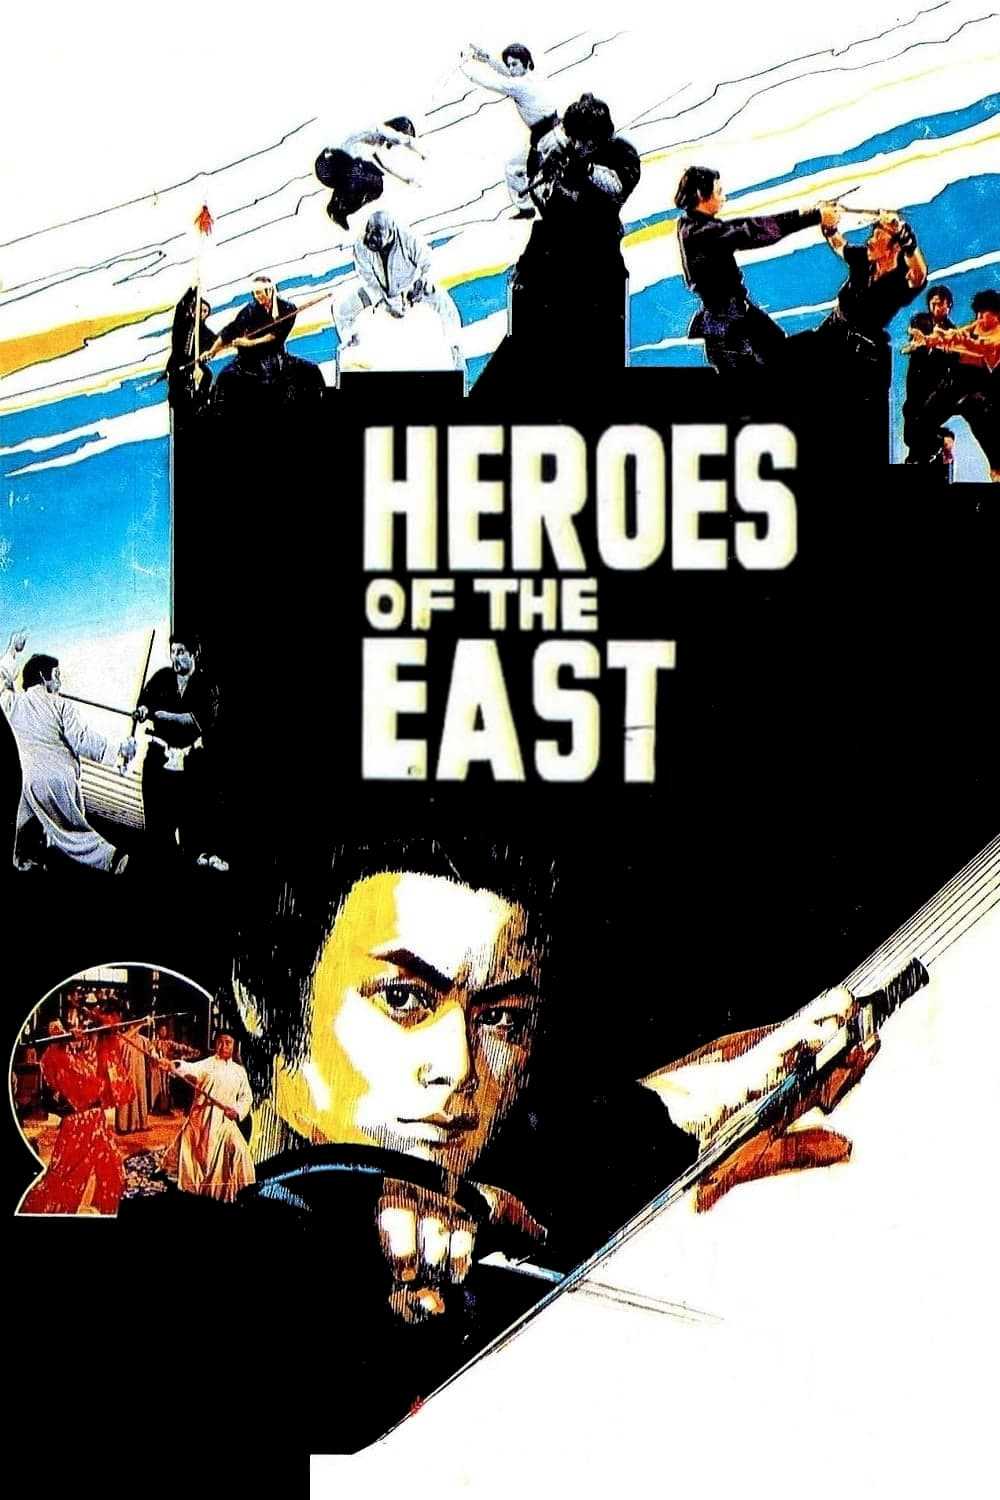 Heroes of the east - Heroes of the east